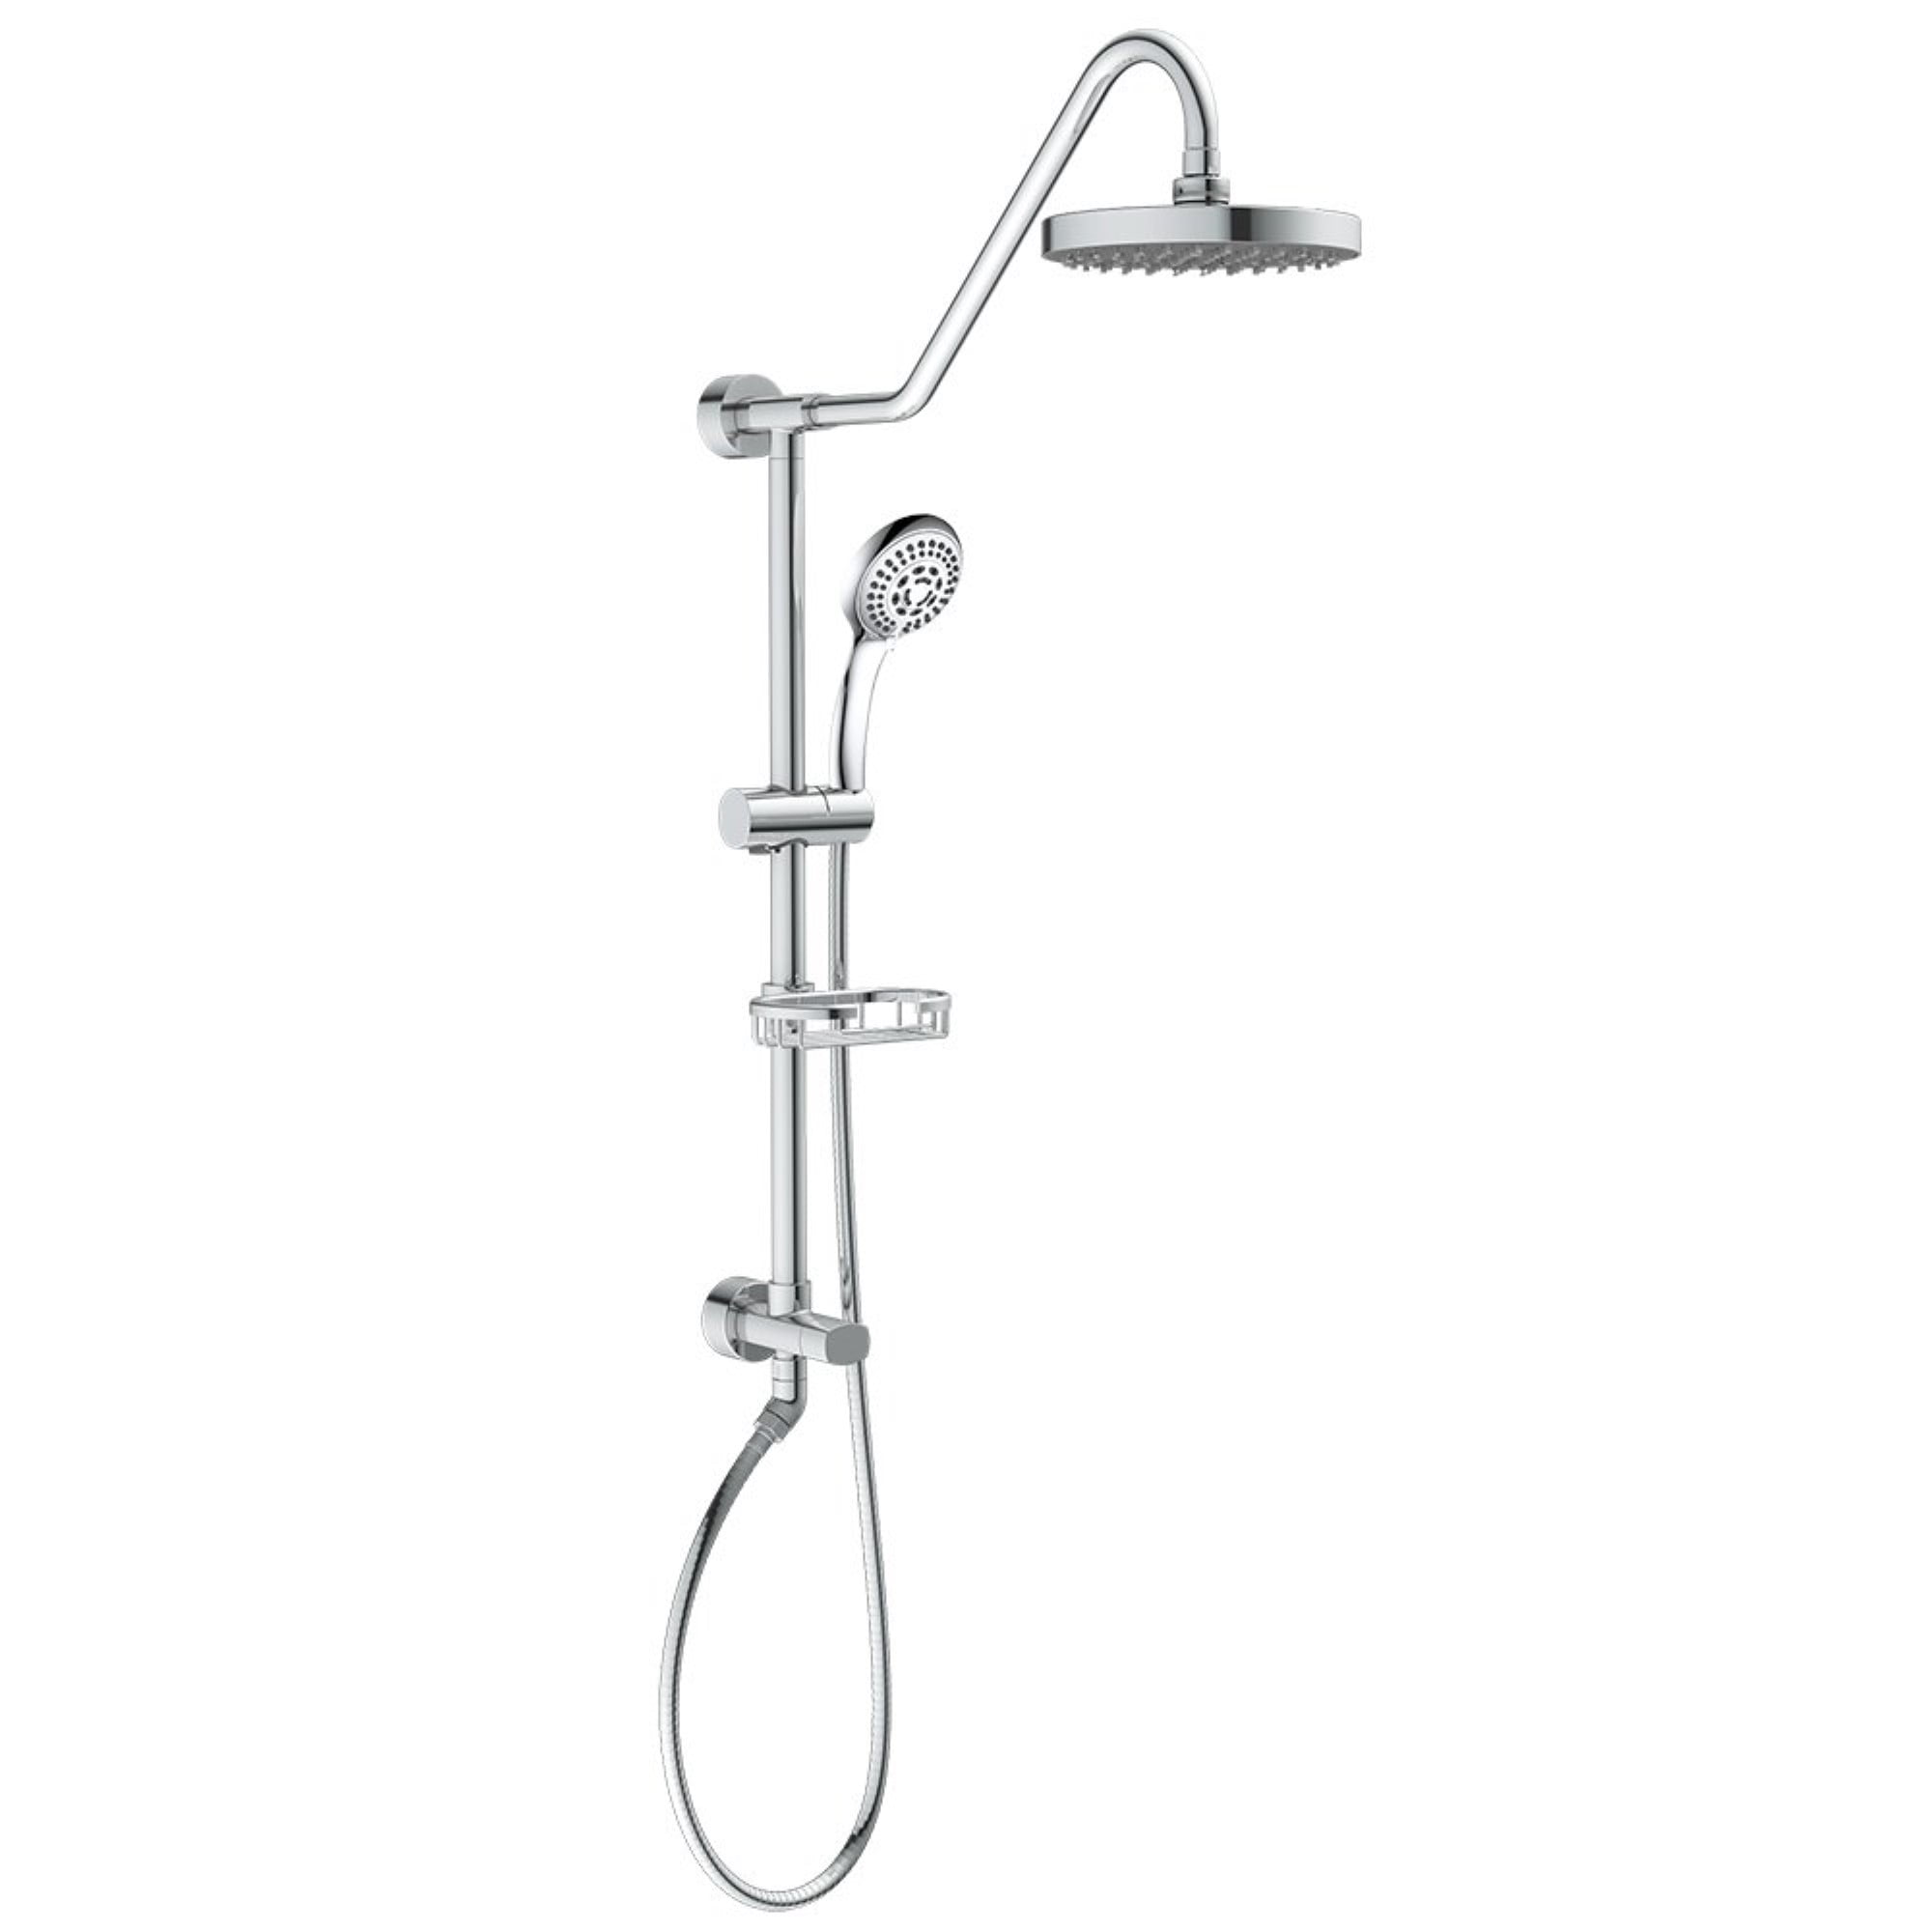 Chrome Polaris 1 Retrofit Rain Shower System for Low-ceiling Bathrooms 